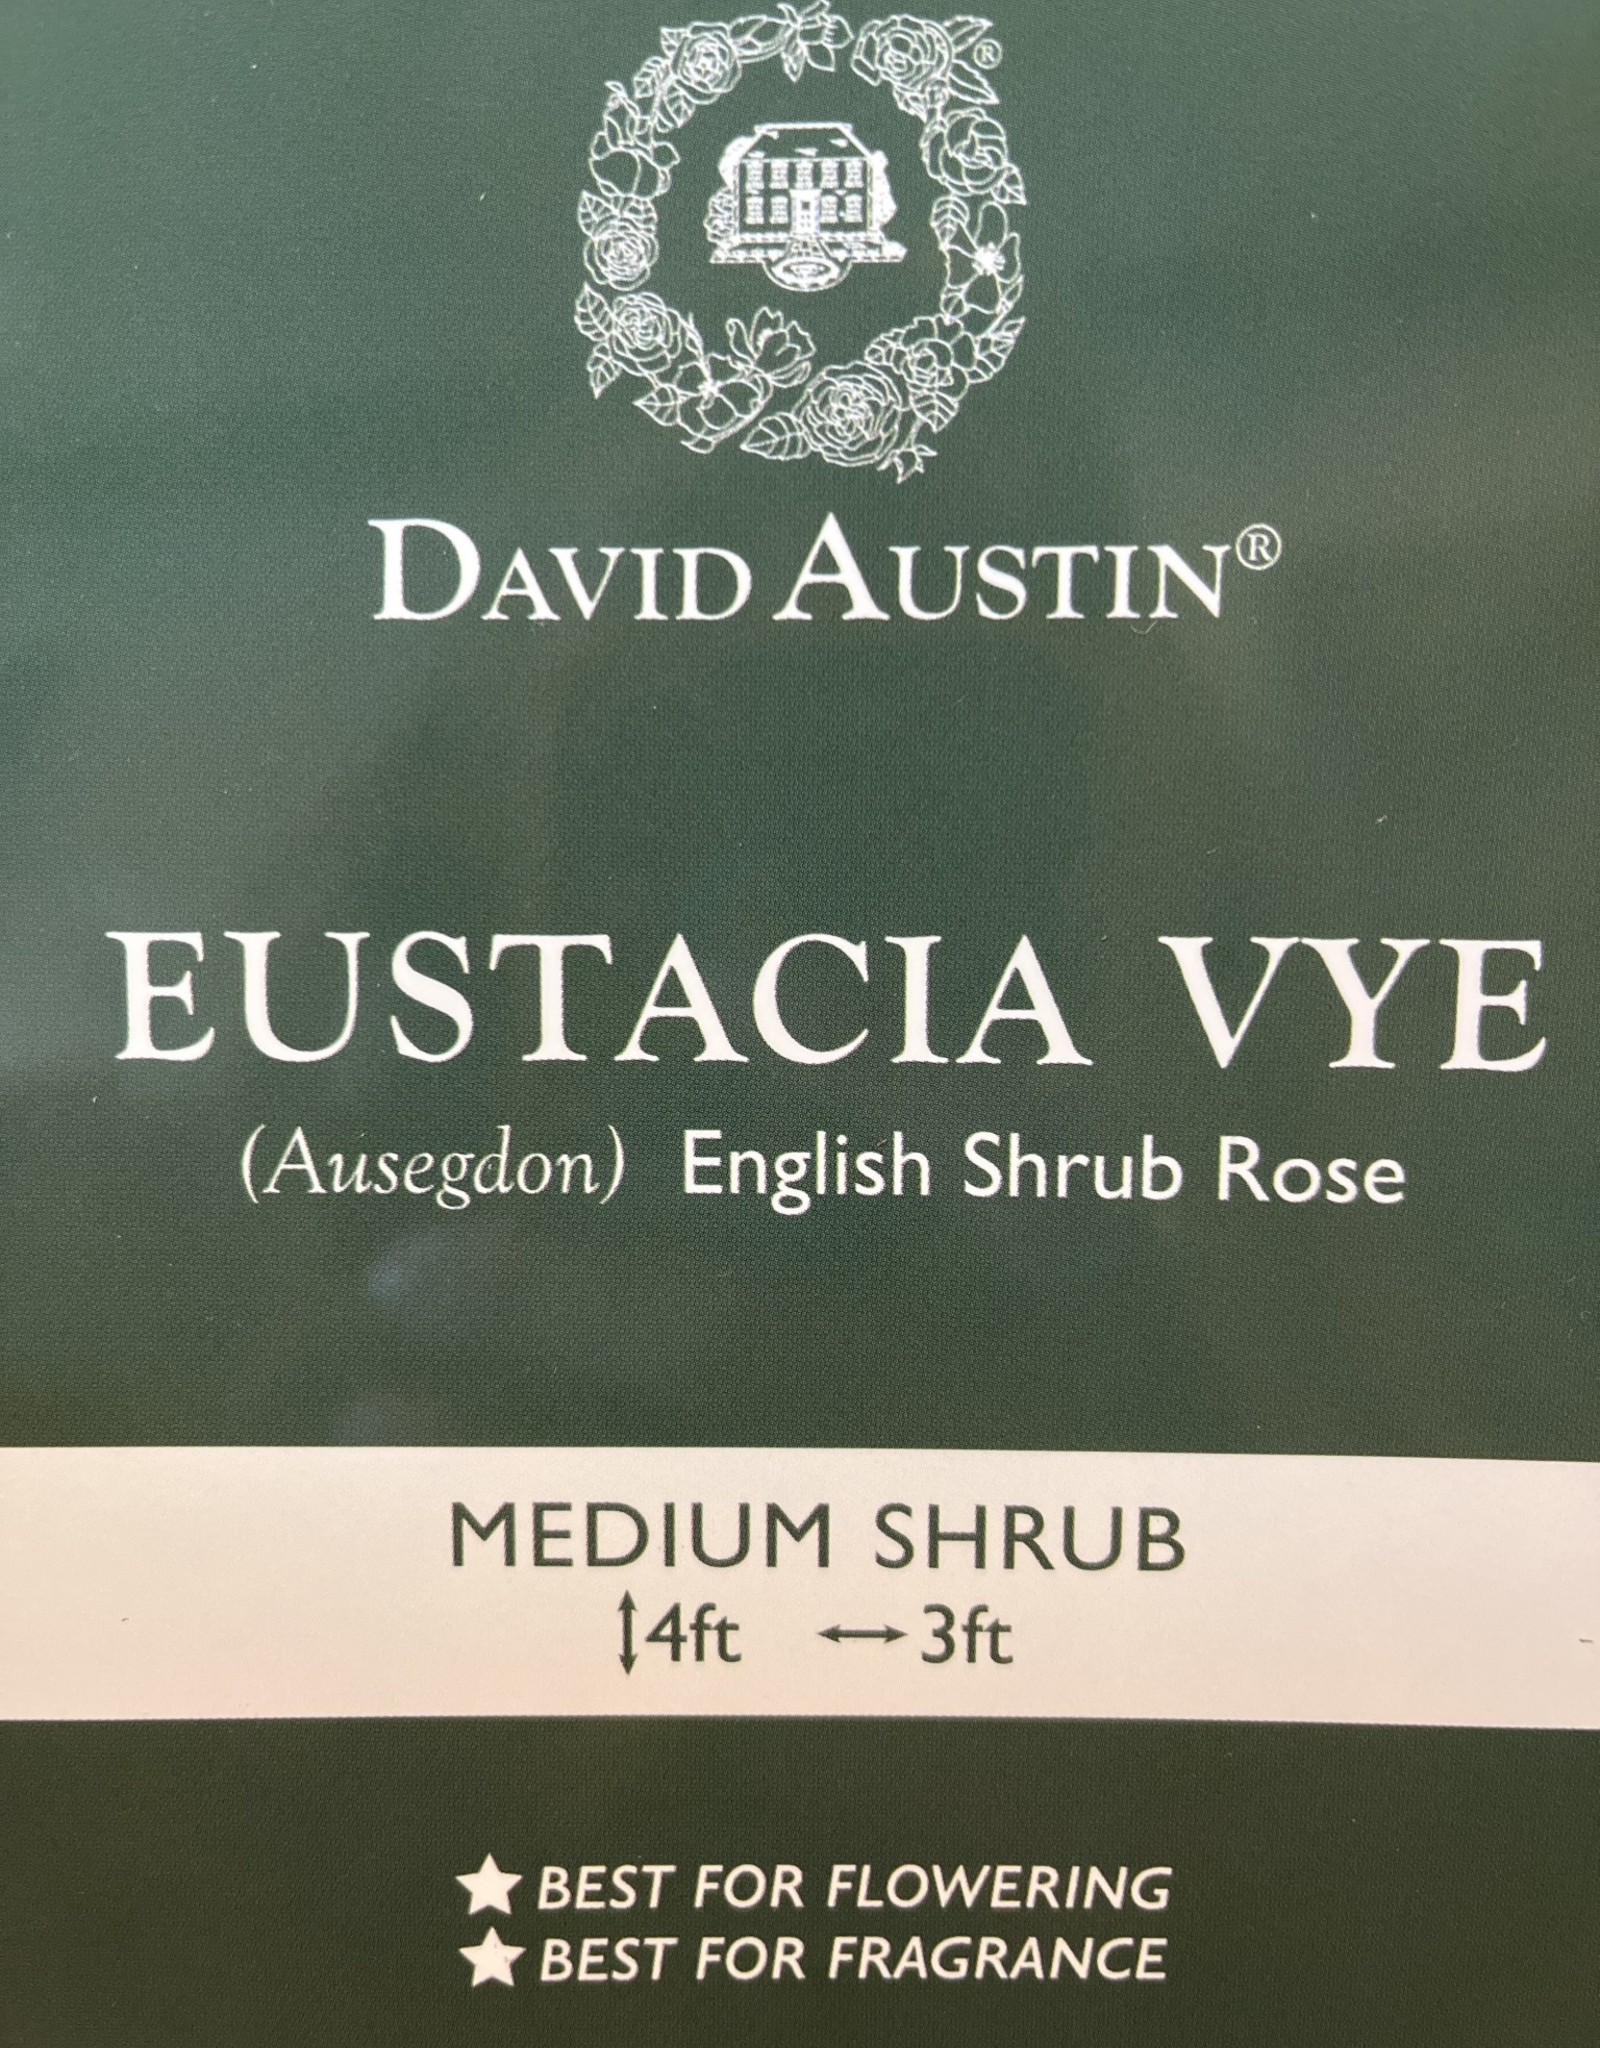 David Austin David Austin Rose Eustacia Vye